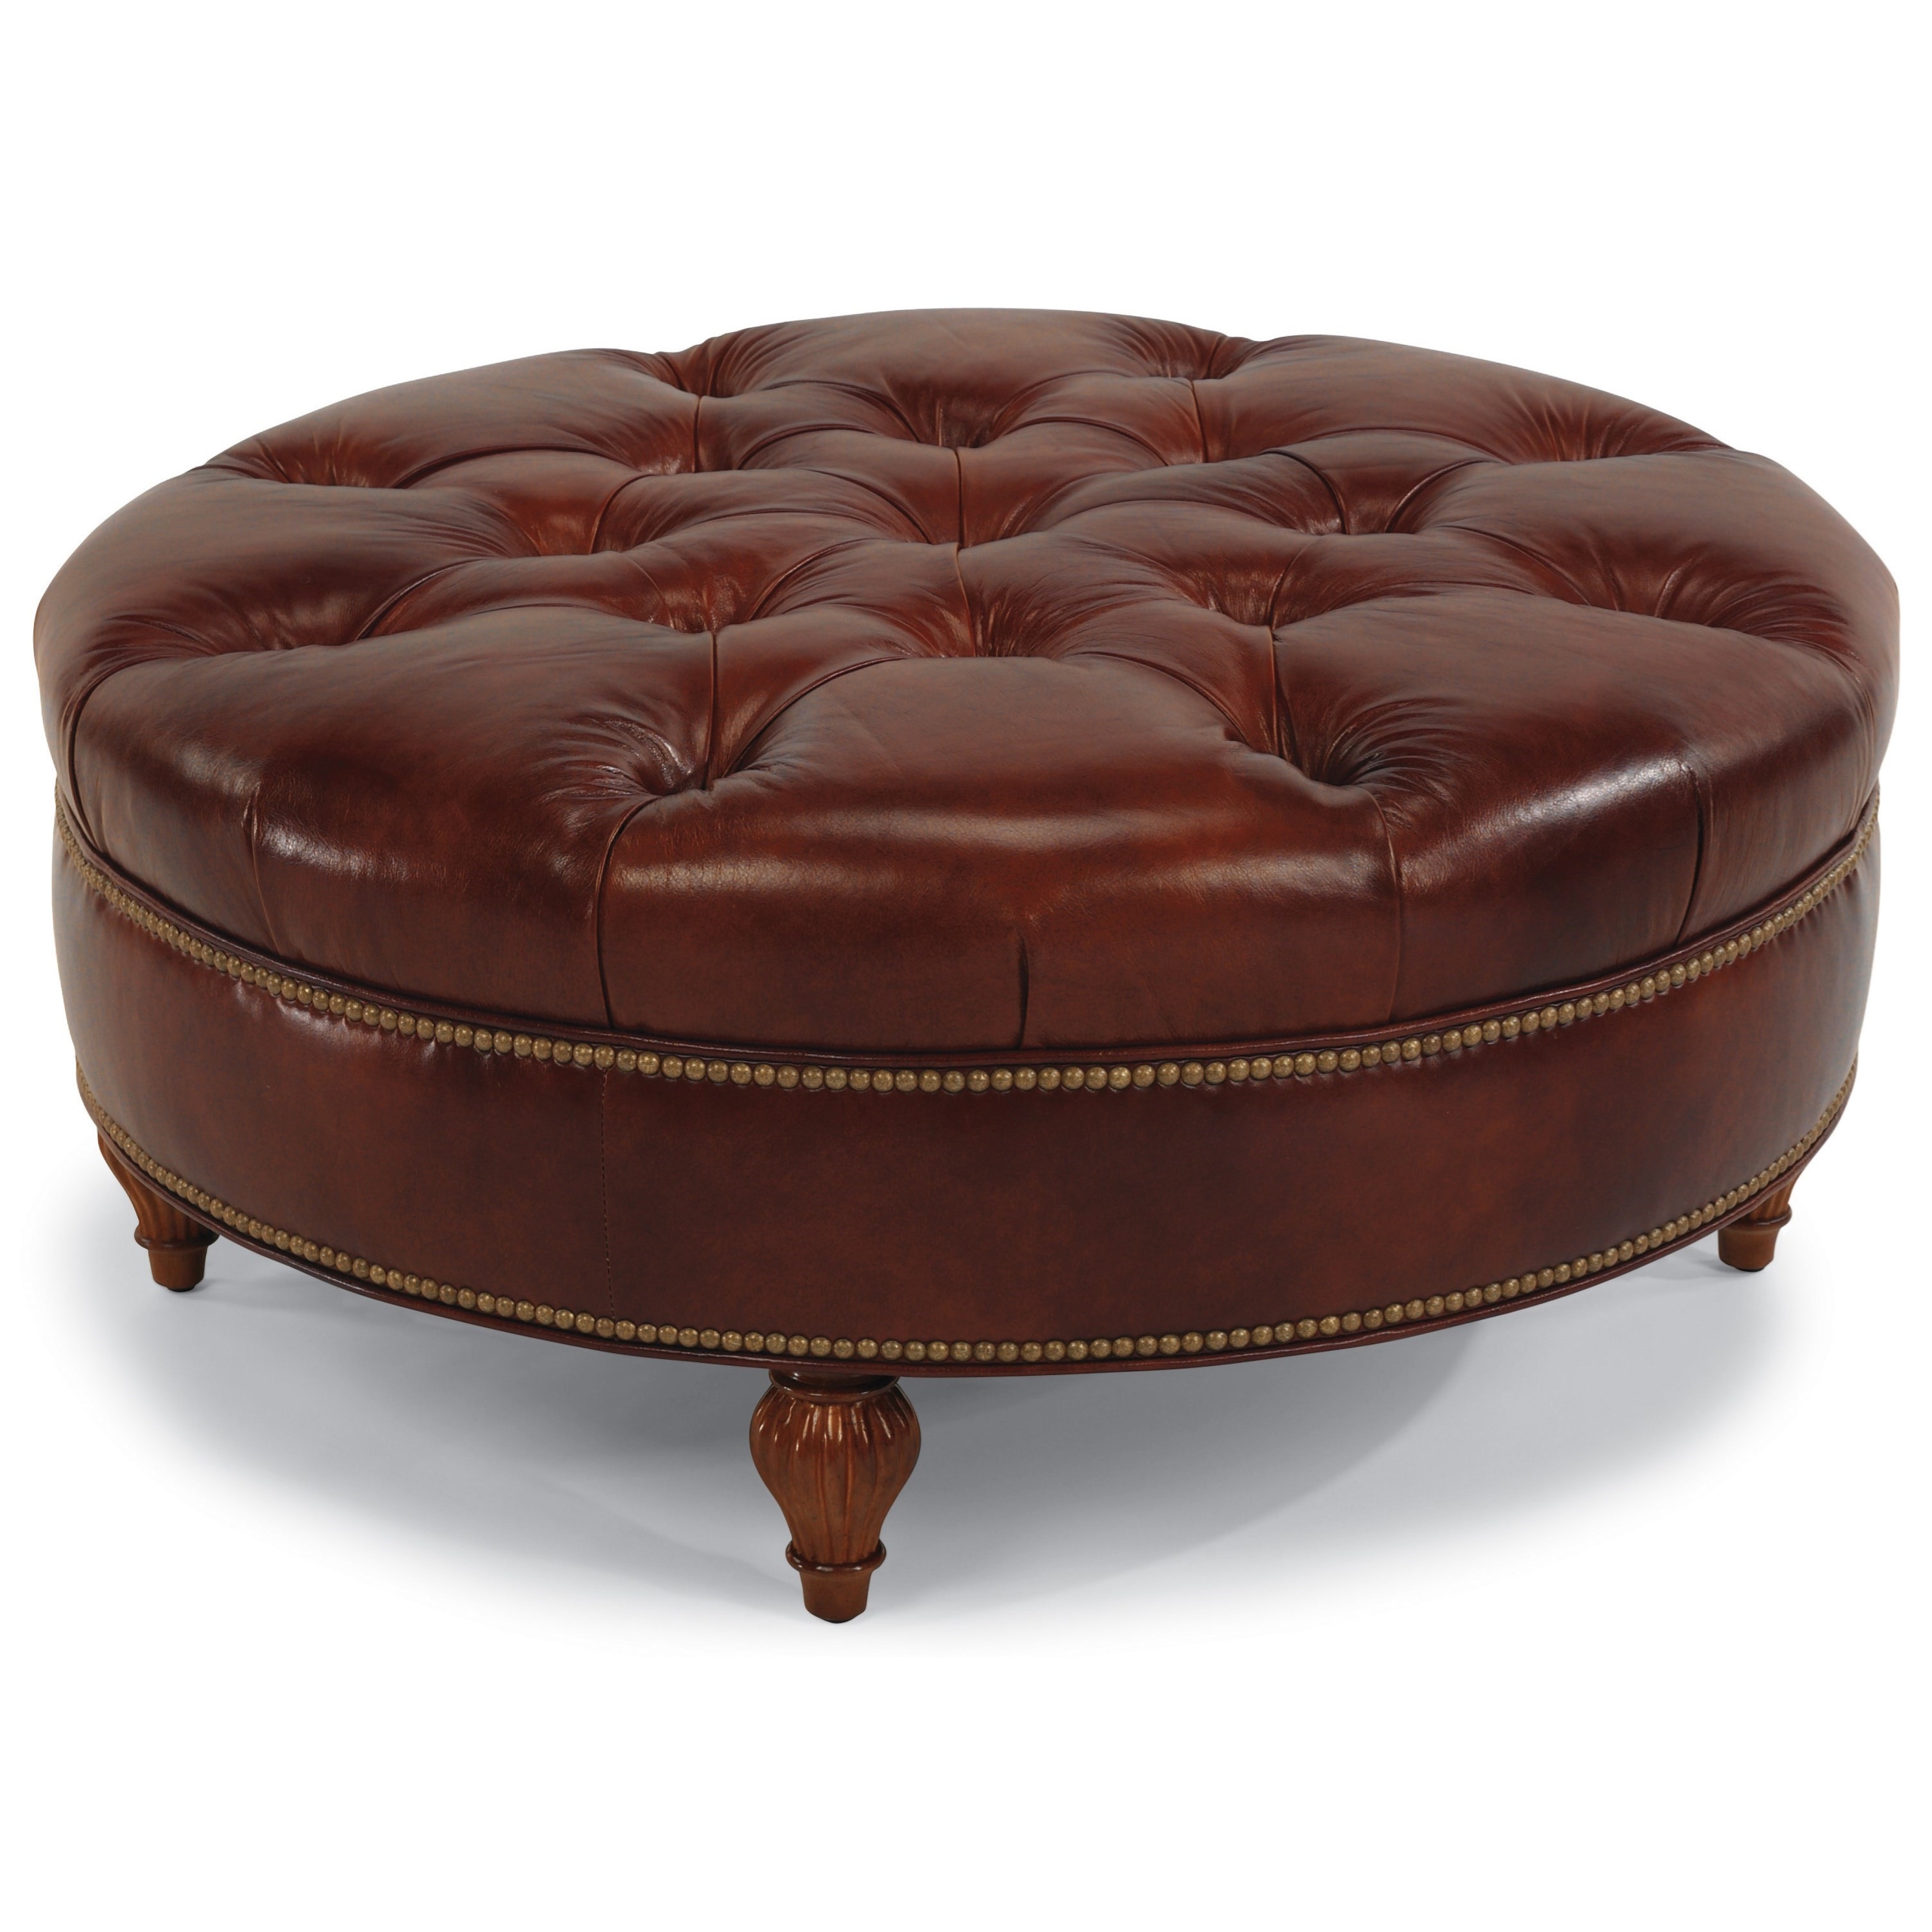 Round leather ottomans 1